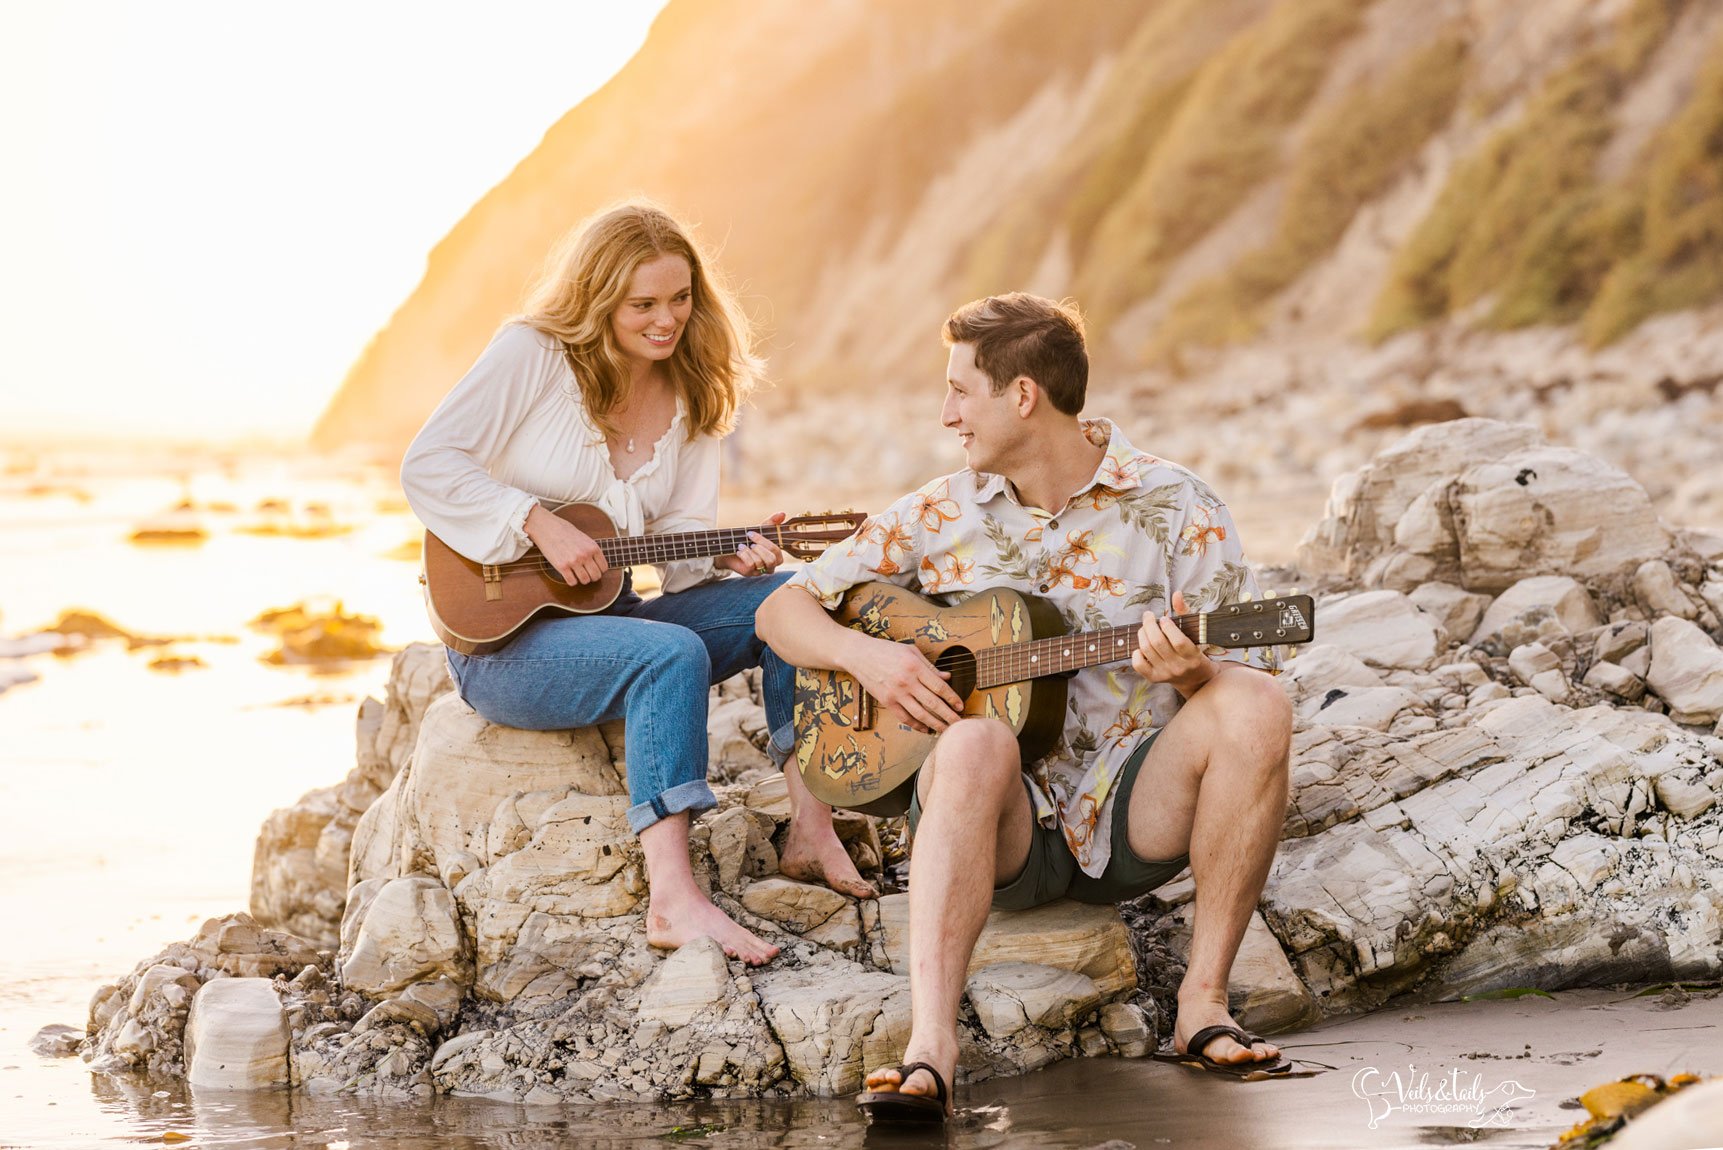 Santa Barbara photographer, beach sunset engagement session with guitars